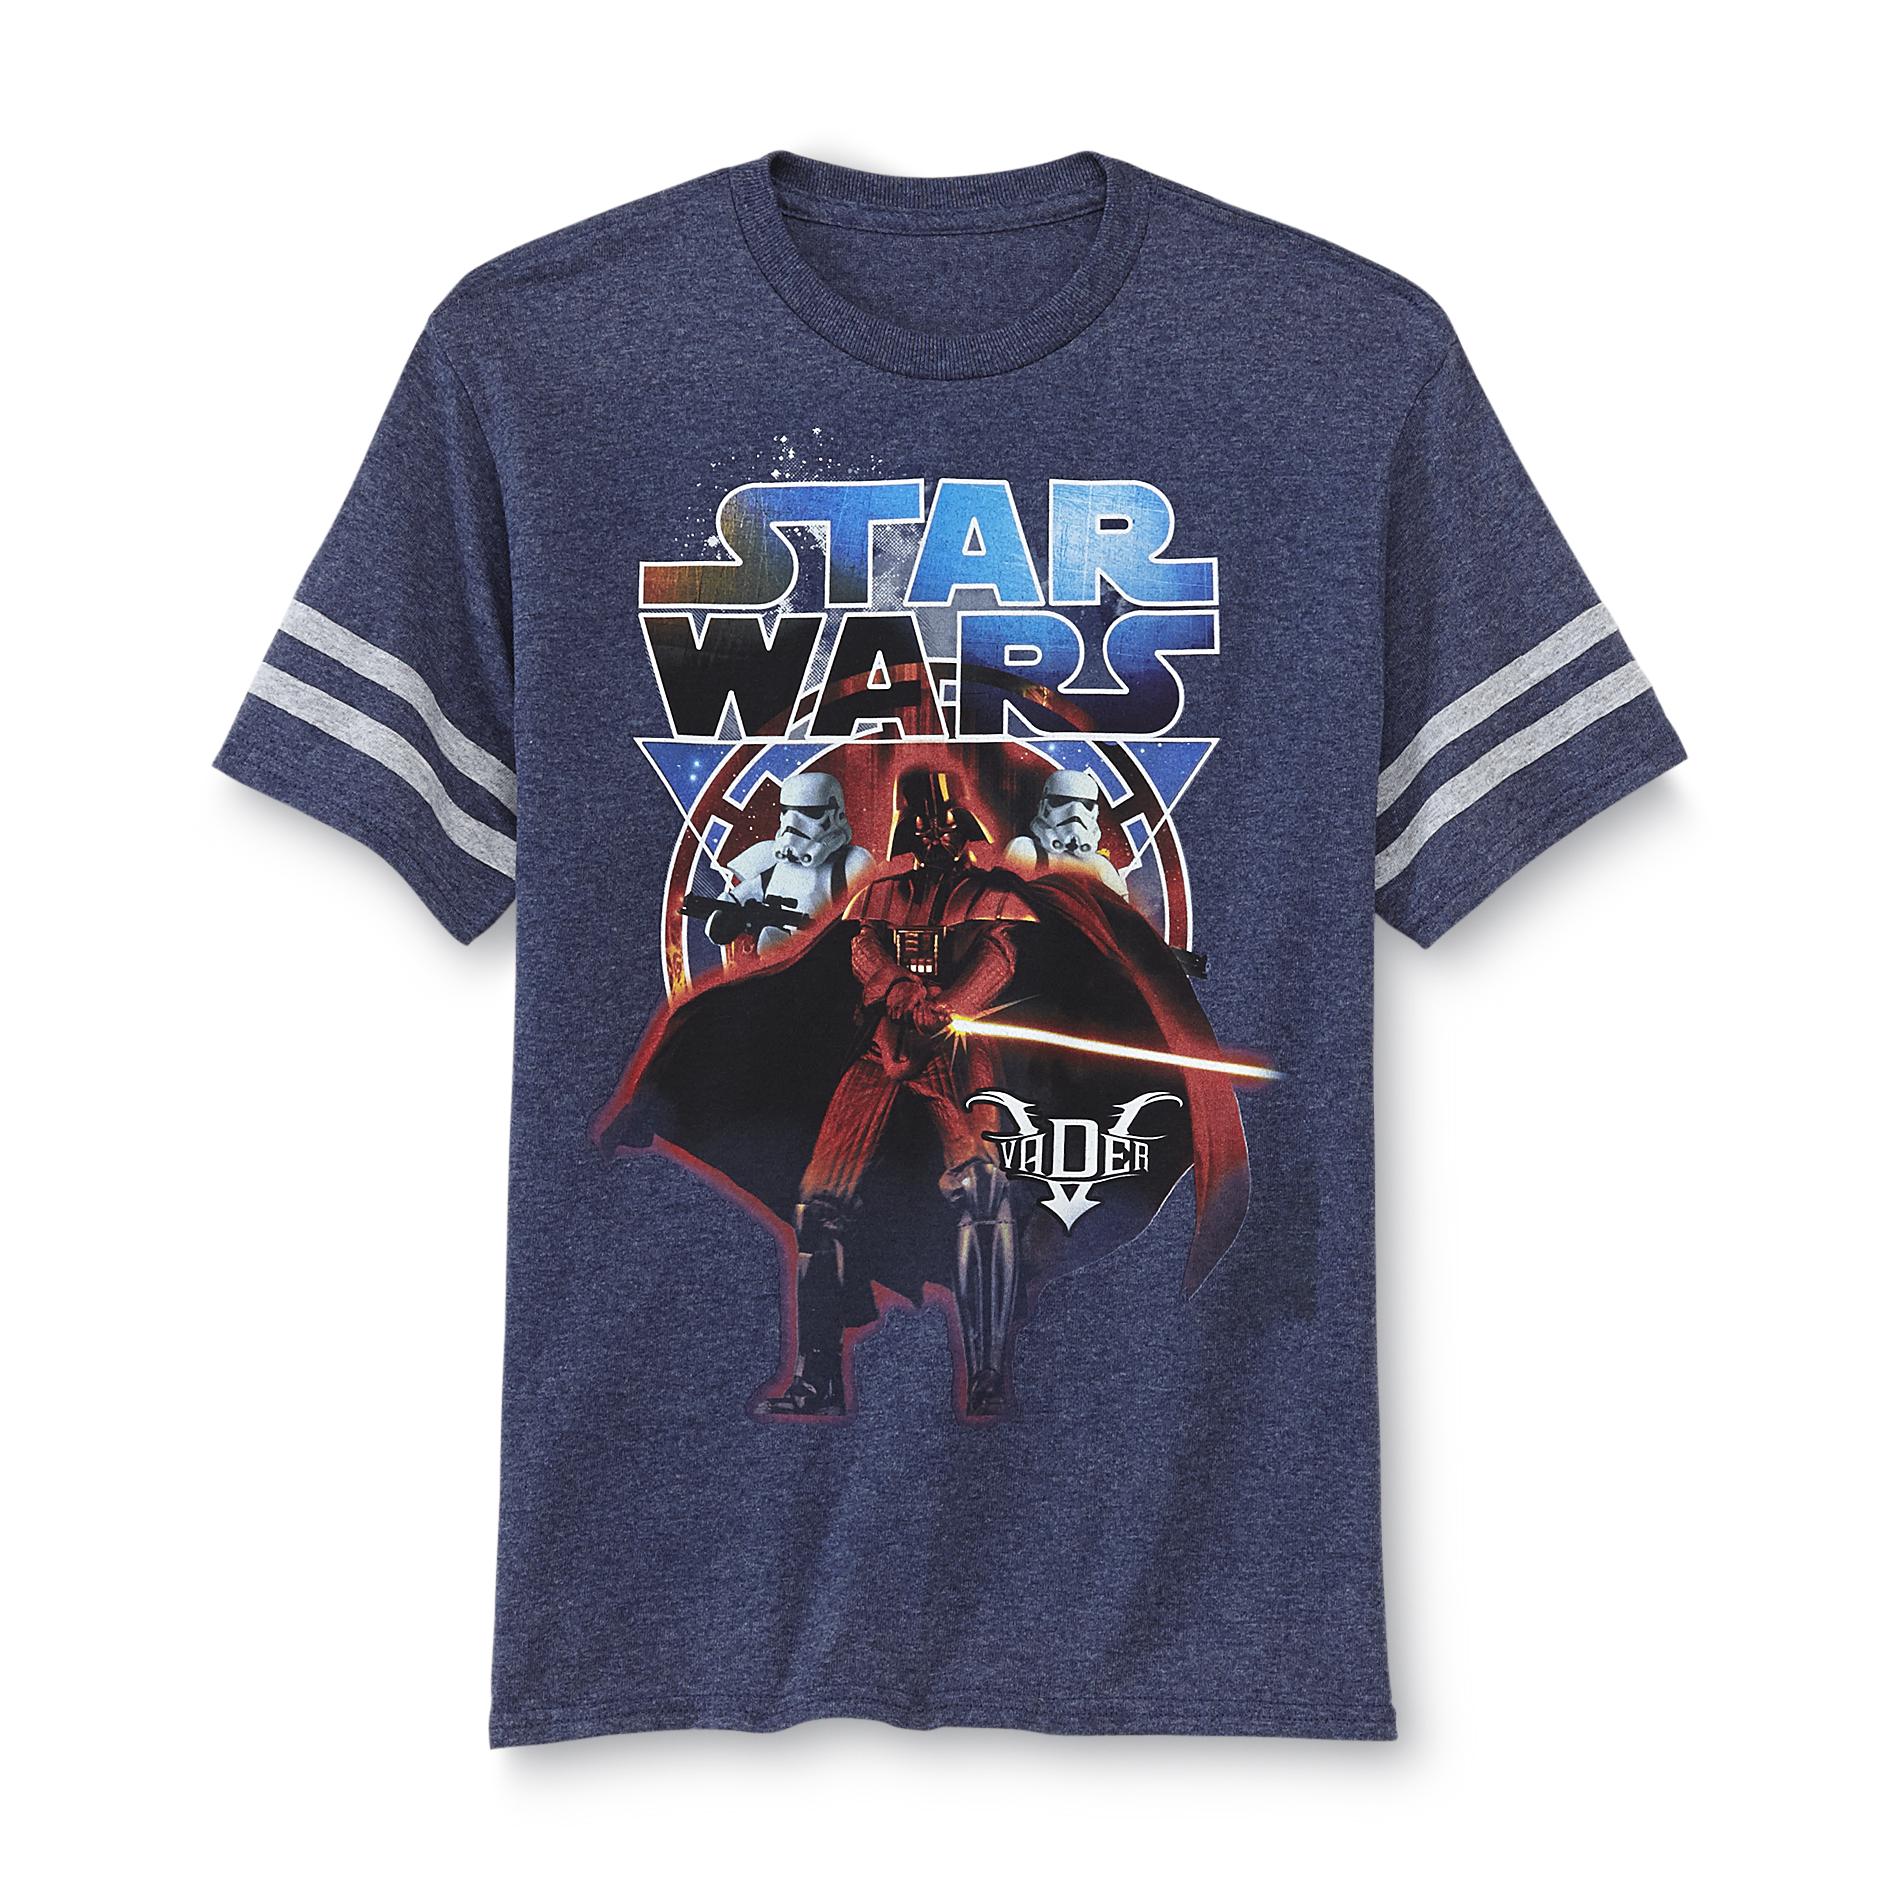 Star Wars Boy's Graphic T-Shirt - Darth Vader